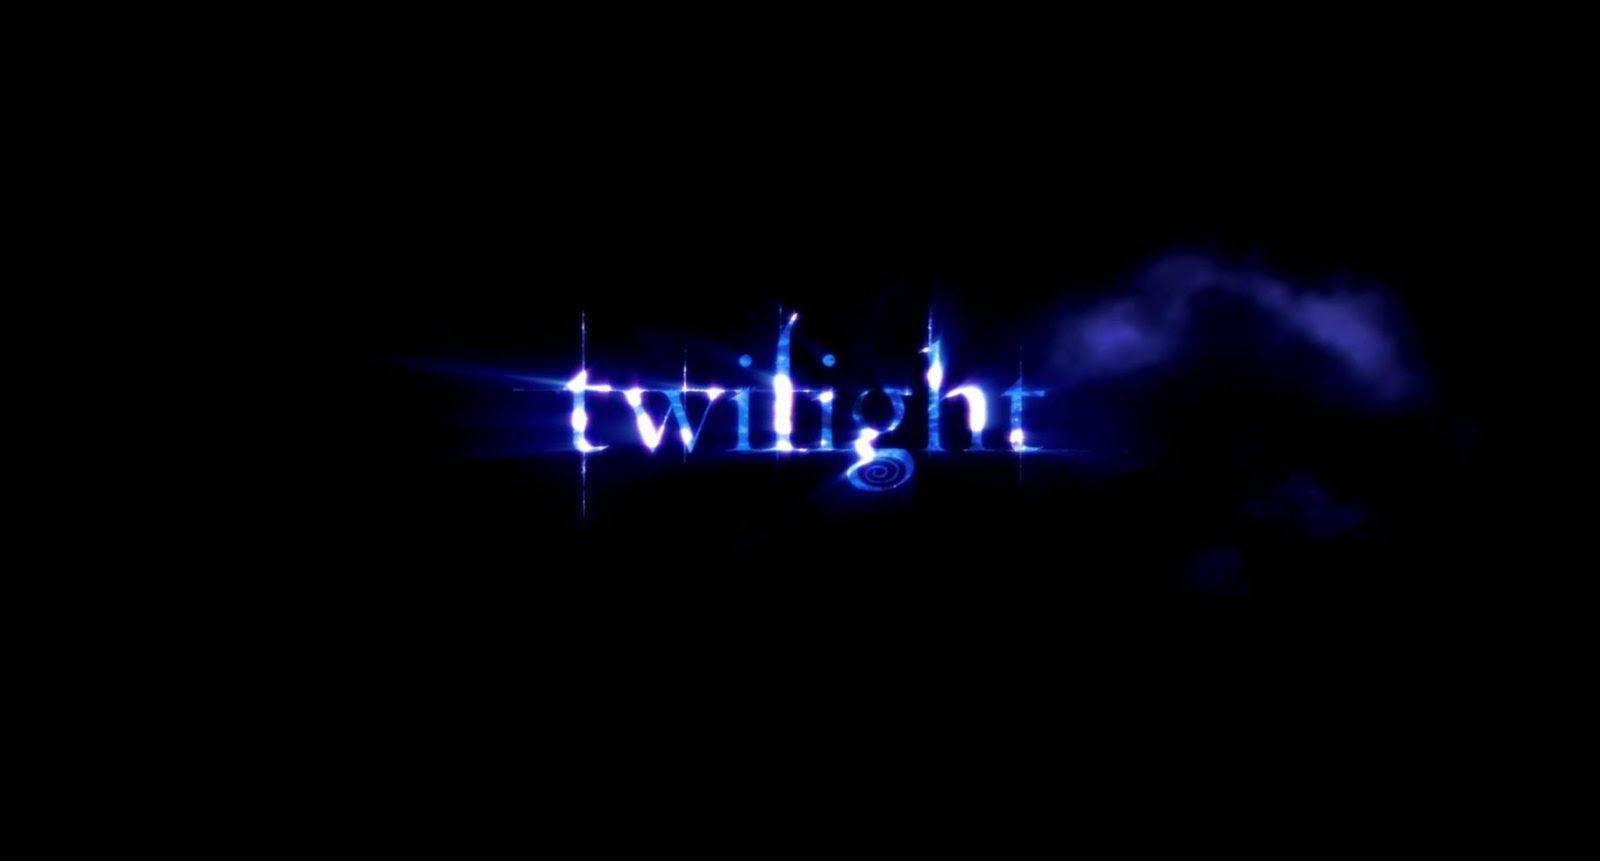 Twlight Logo - Twilight Wallpaper